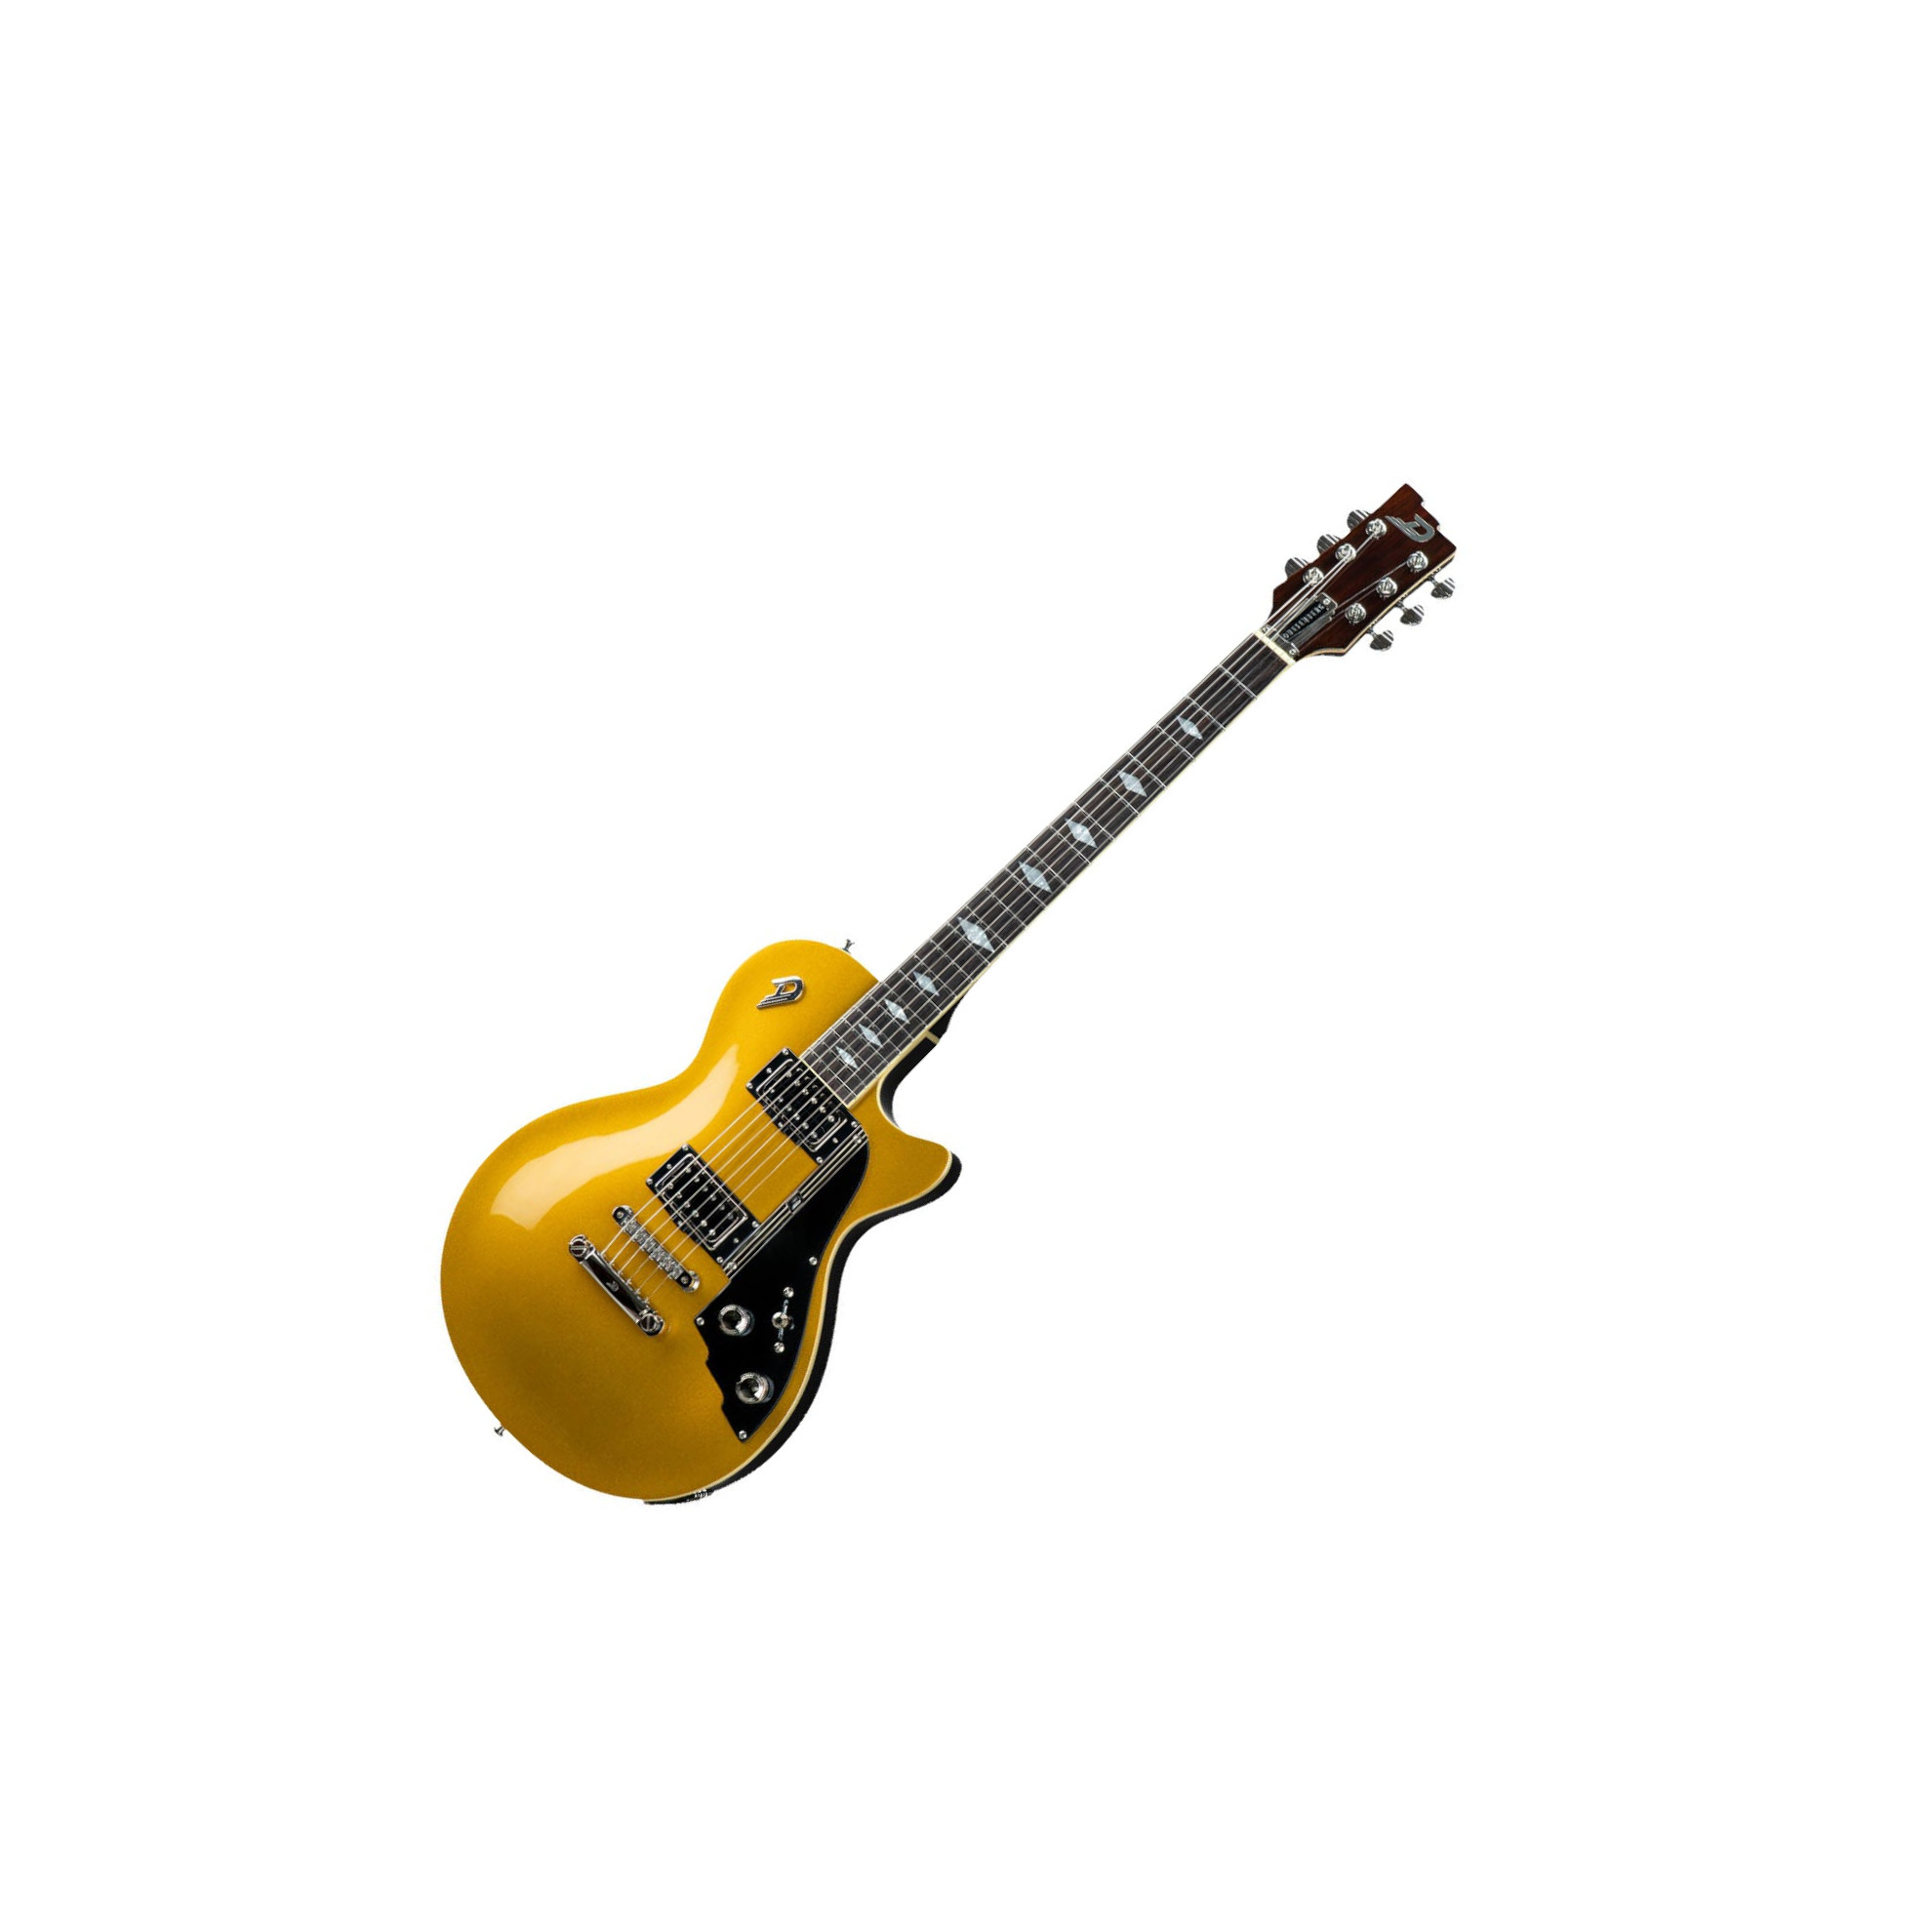 Duesenberg 59er 2h Ht Rw - Gold Top - Guitarra eléctrica de corte único. - Variation 1